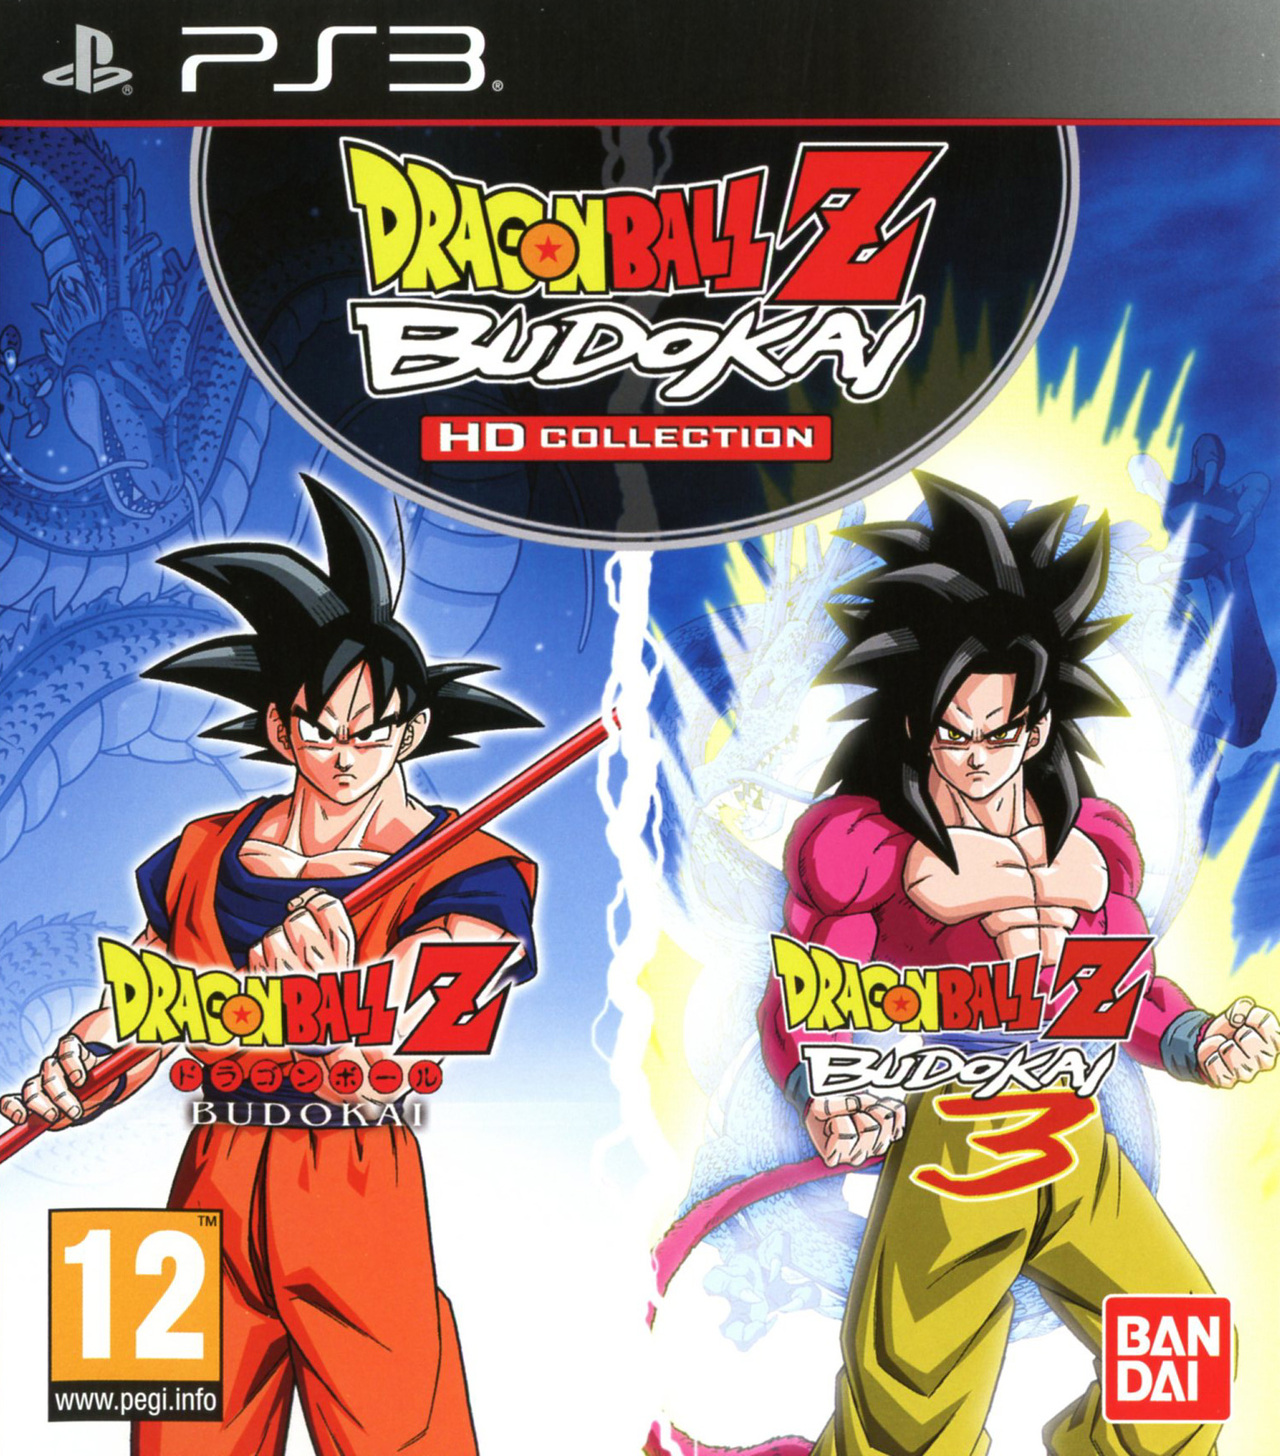 jaquette du jeu vidéo Dragon Ball Z : Budokai HD Collection